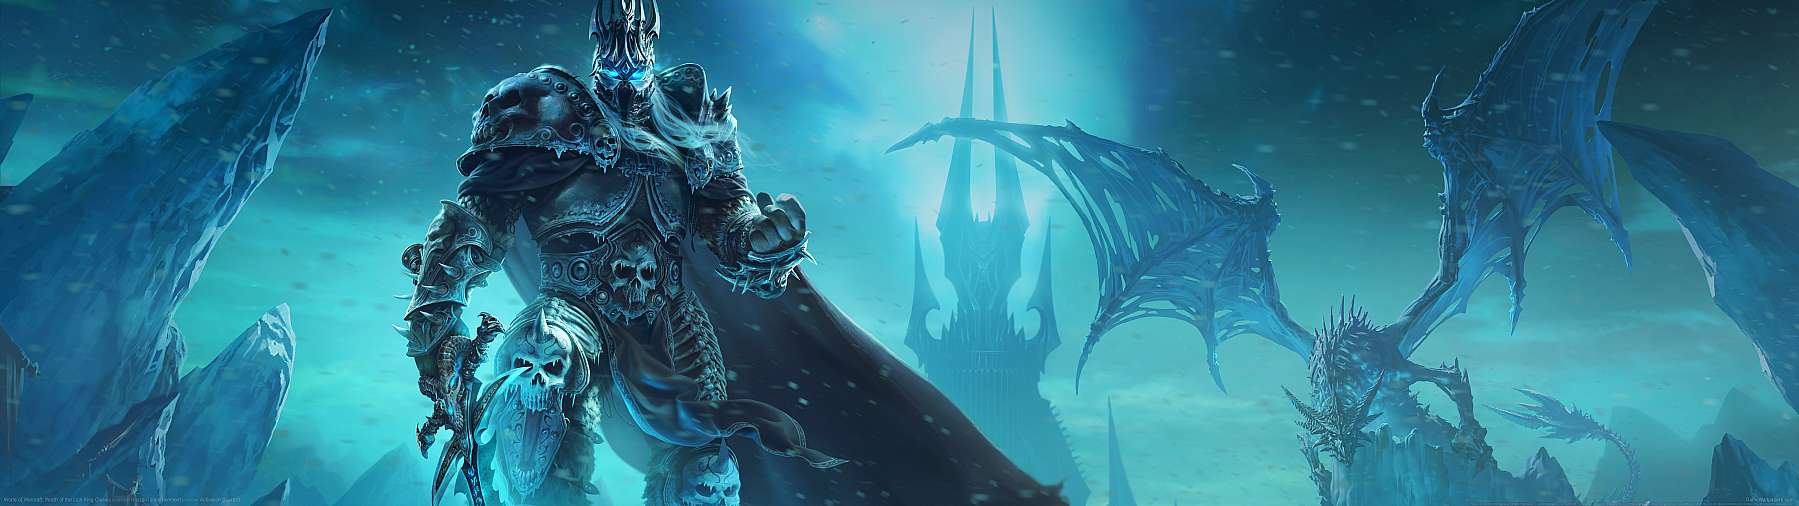 World of Warcraft: Wrath of the Lich King Classic fondo de escritorio